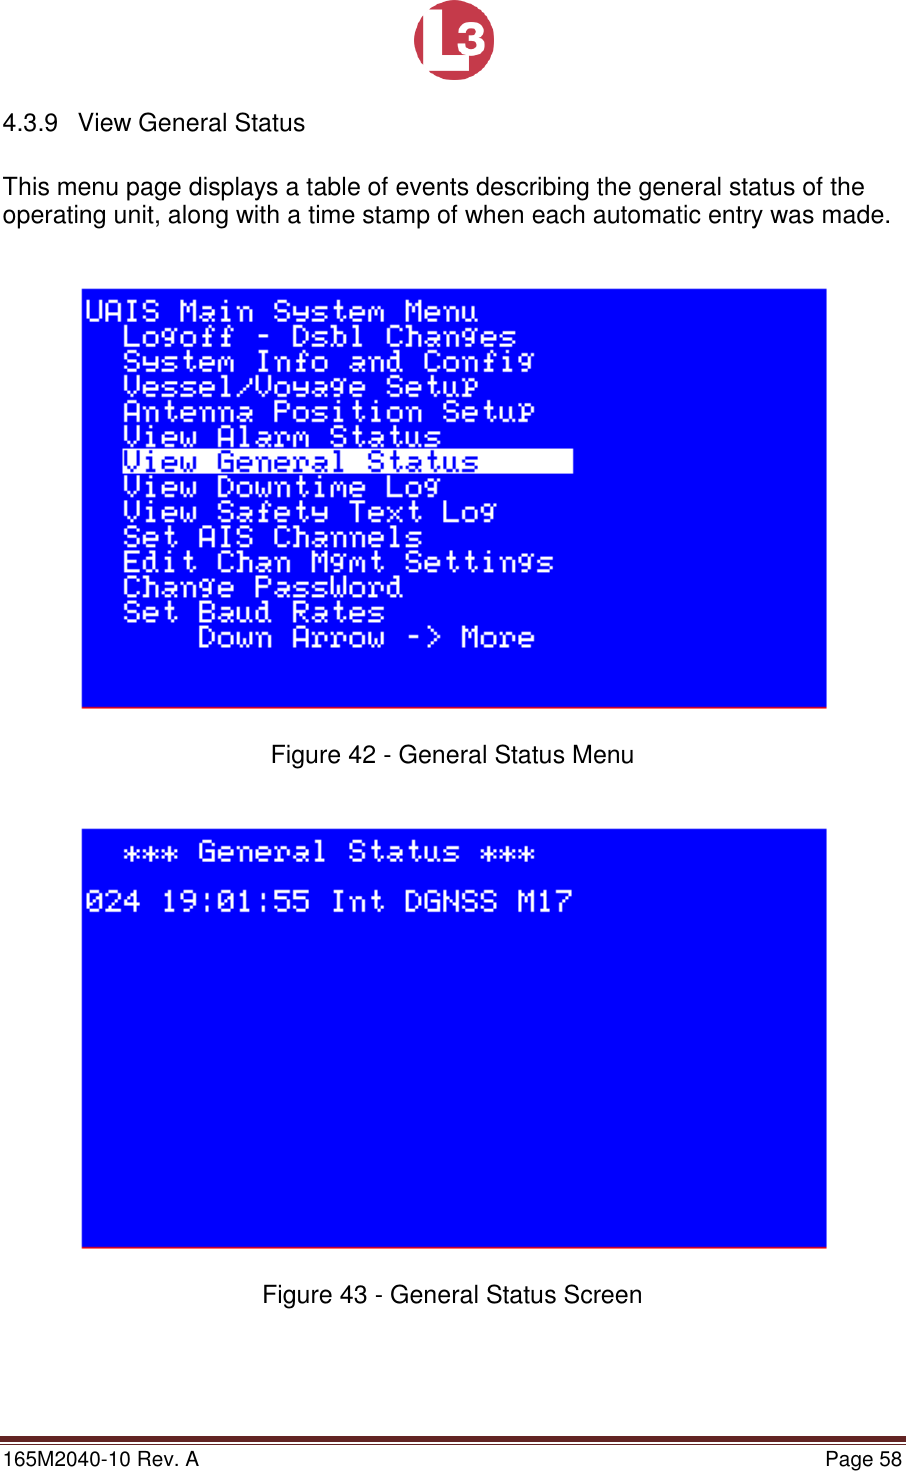 Page 58 of L3 Technologies AISA6 Shipboard Mobile AIS User Manual Memory Verification Procedure